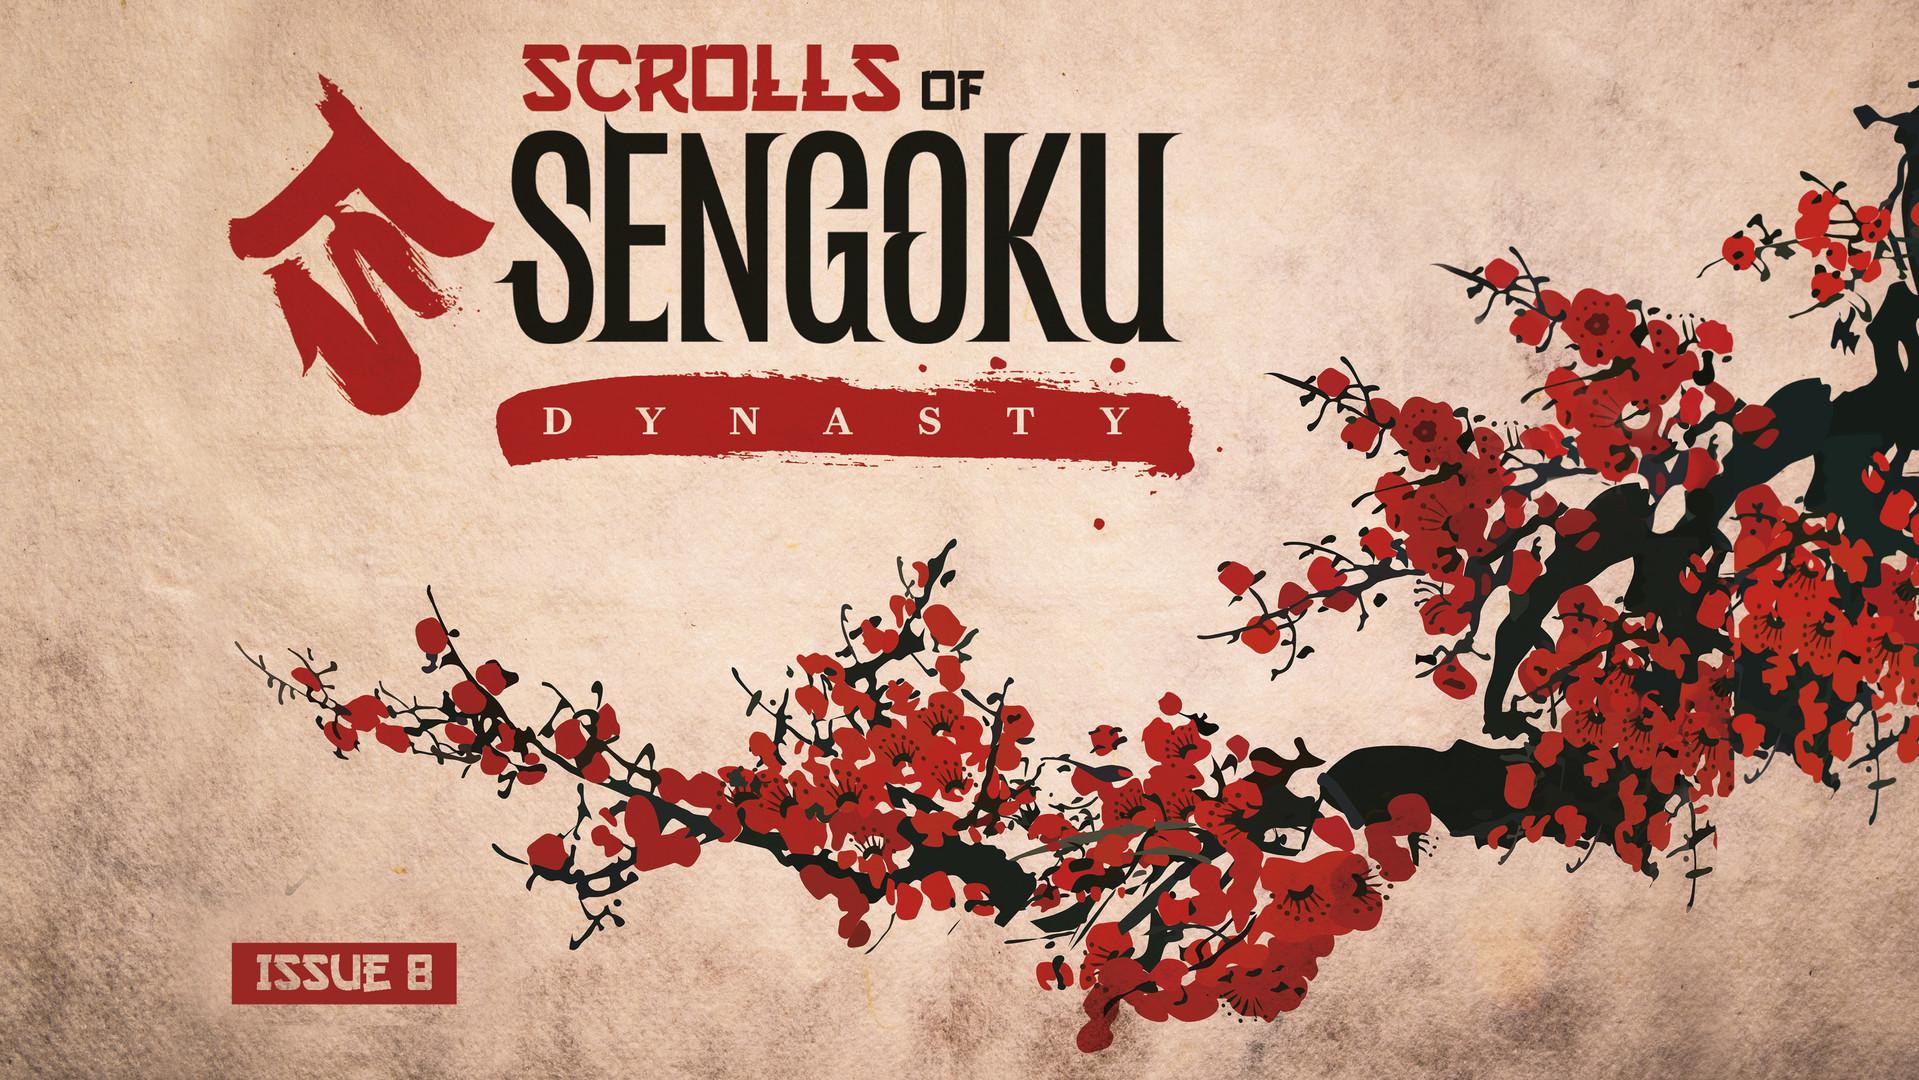 Scrolls of Sengoku Dynasty - Complete Scrolls Collection